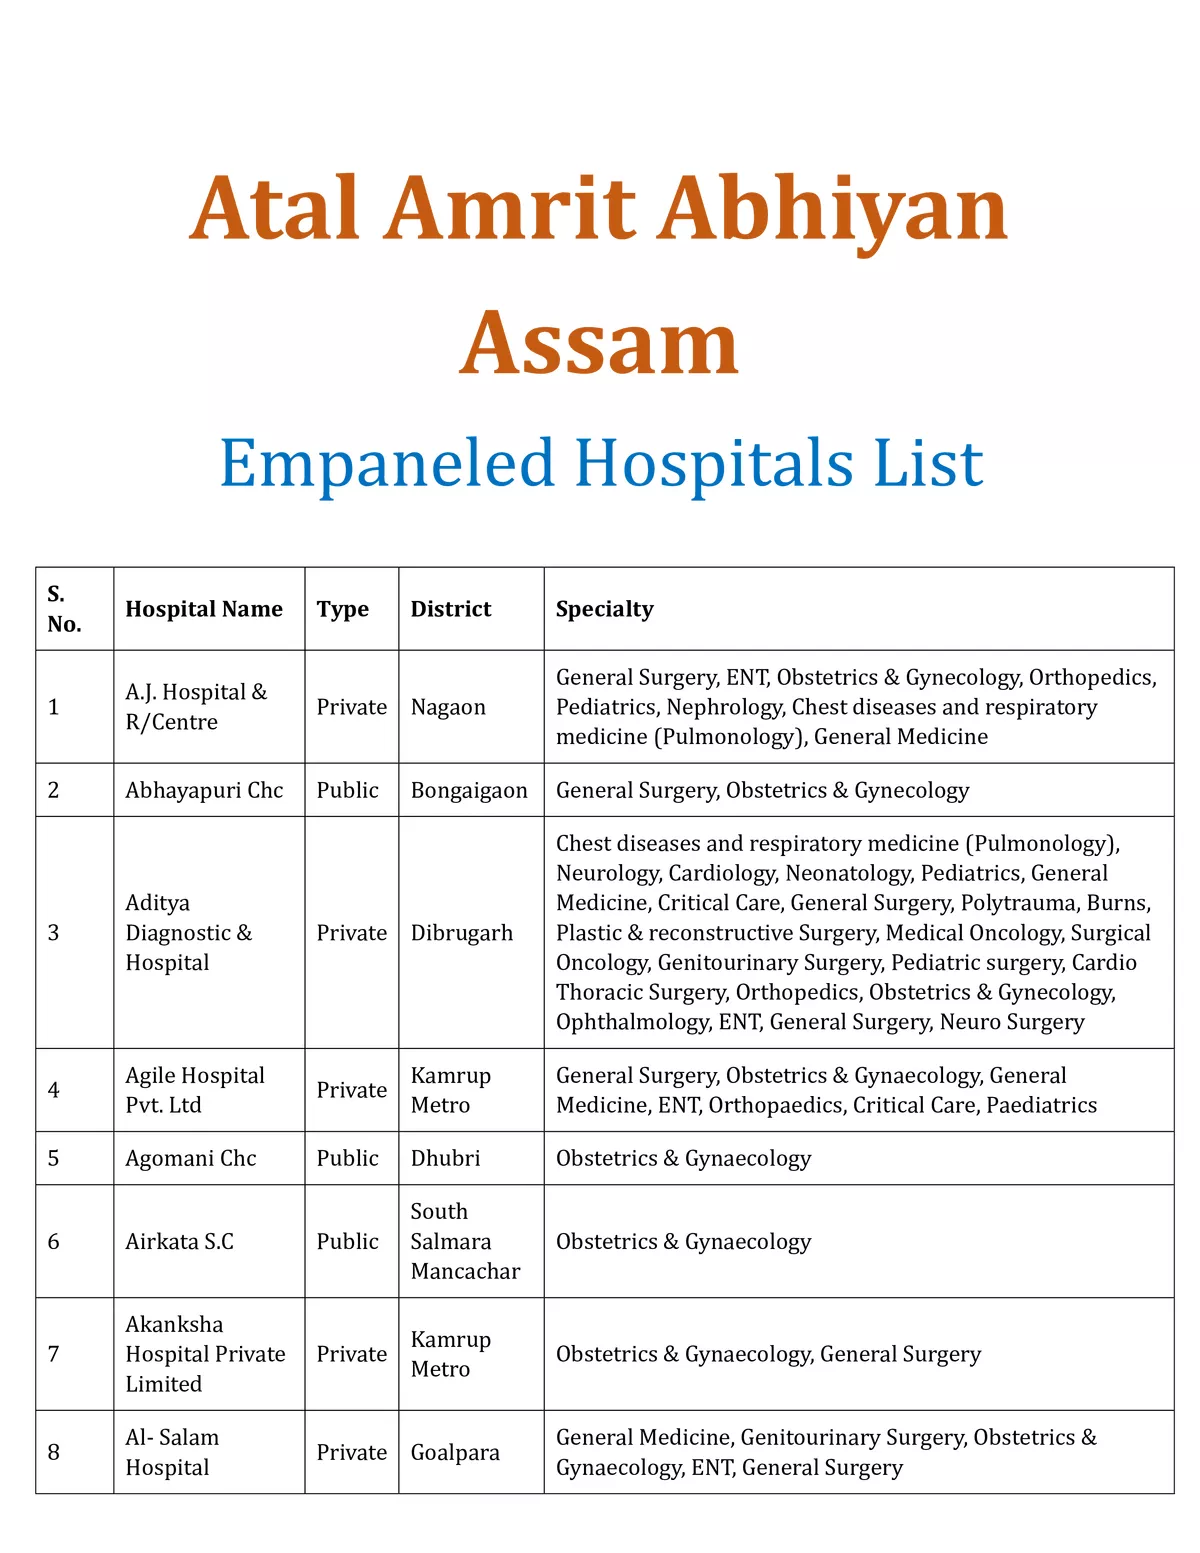 Atal Amrit Abhiyan Hospitals List Assam (PMJAY Hospitals) PDF